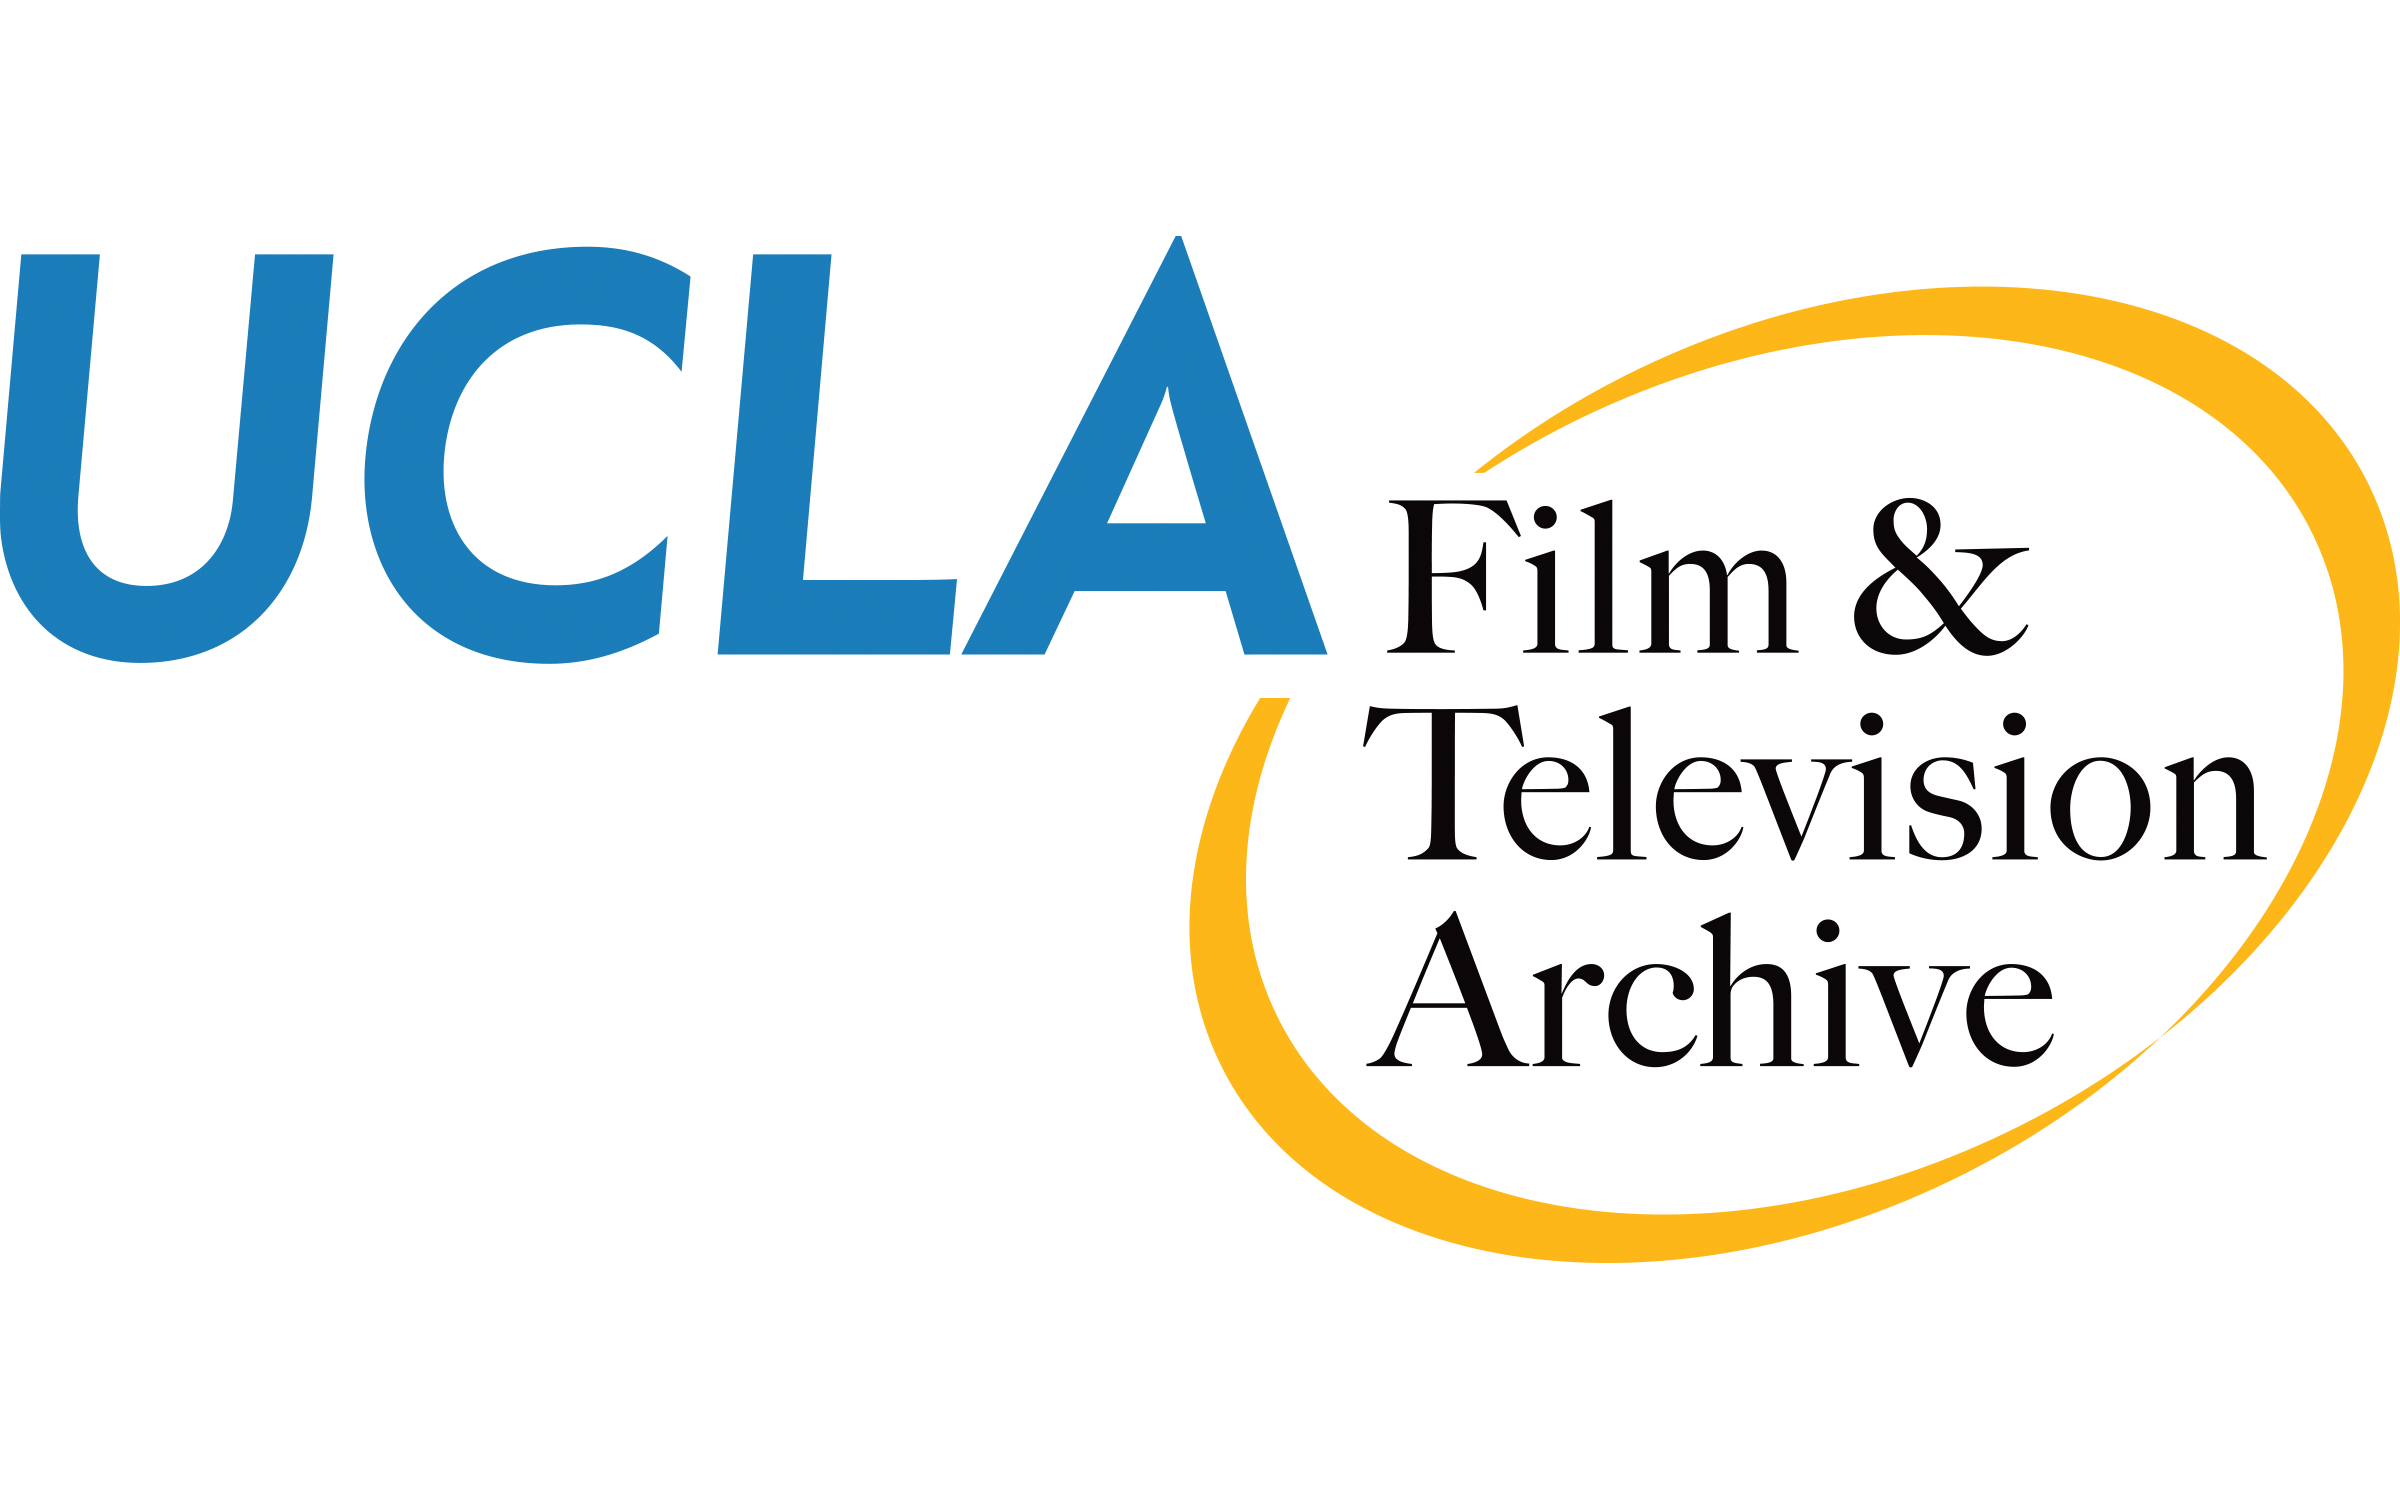 UCLA Film & Television Archive